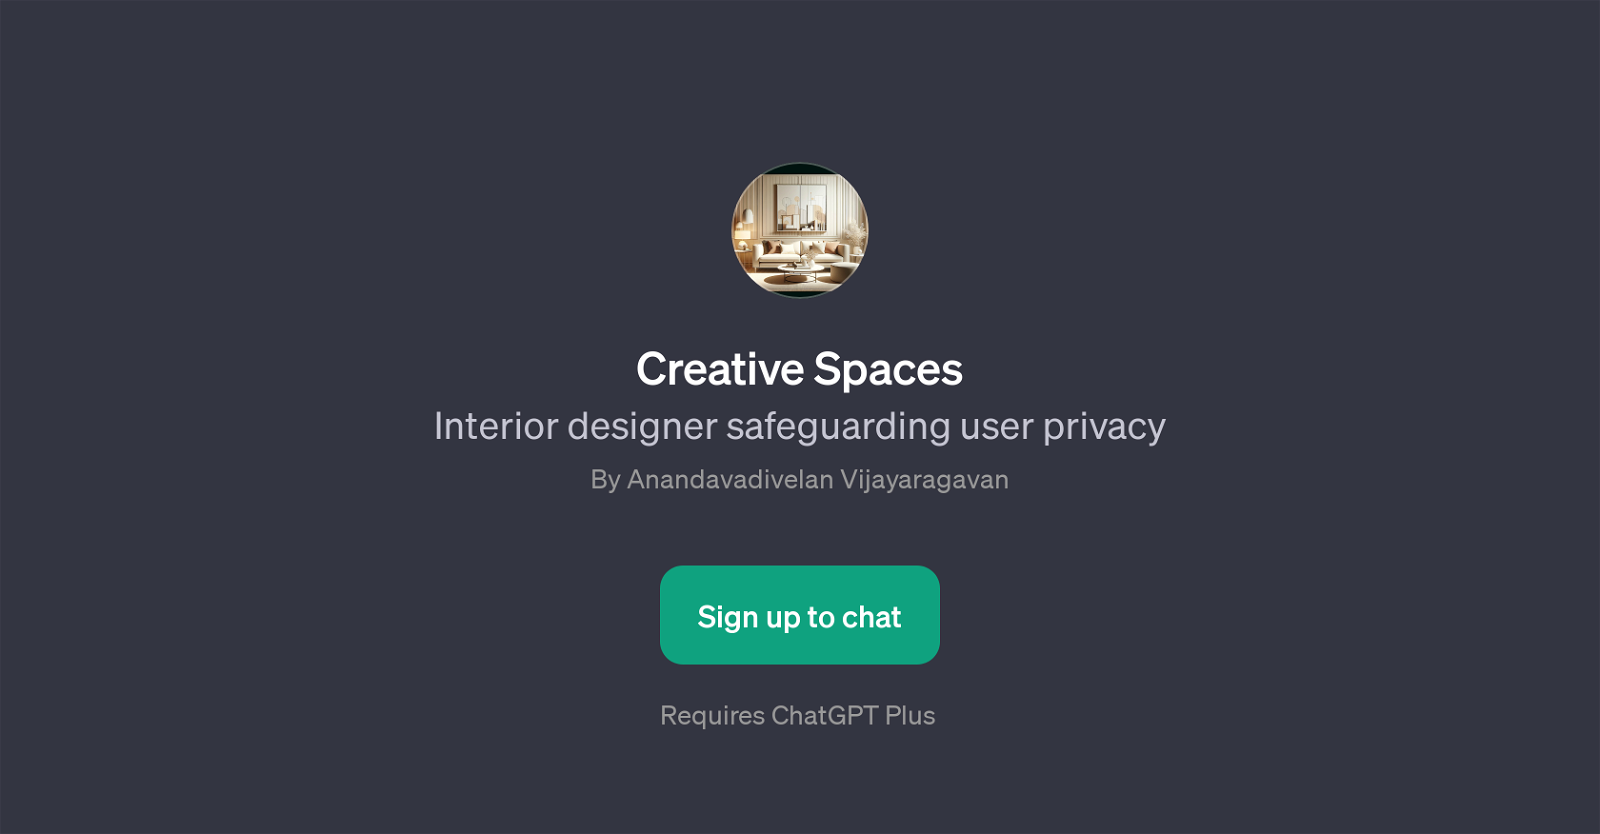 Creative Spaces website